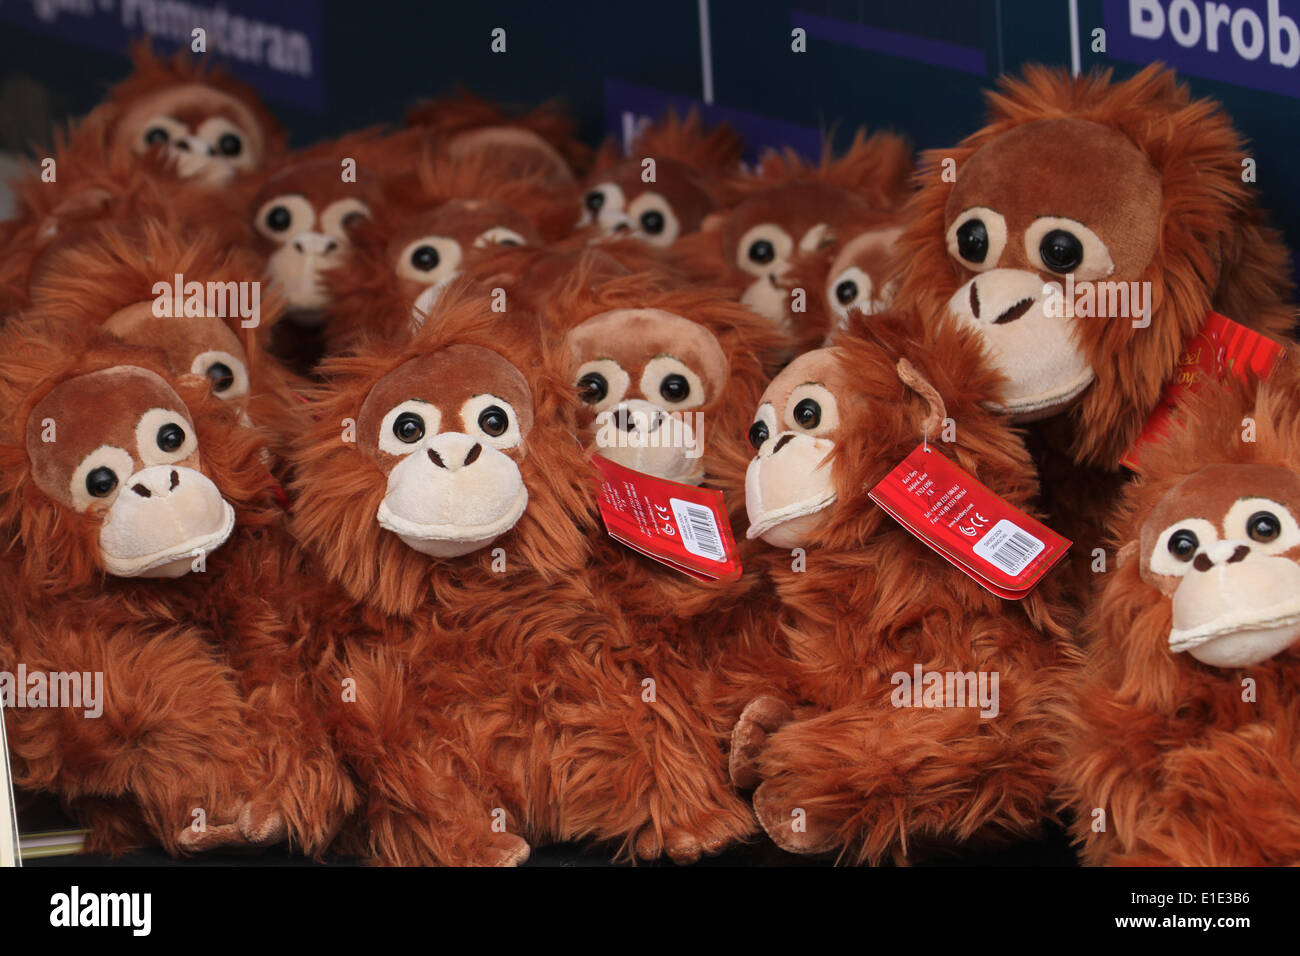 London, UK. 31 May 2014. Orang a tang teddies on sale at the Posh Salvage stall at Trafalgar Square during the Indonesia Day celebrationsCredit: David Mbiyu/ Alamy Live News Stock Photo